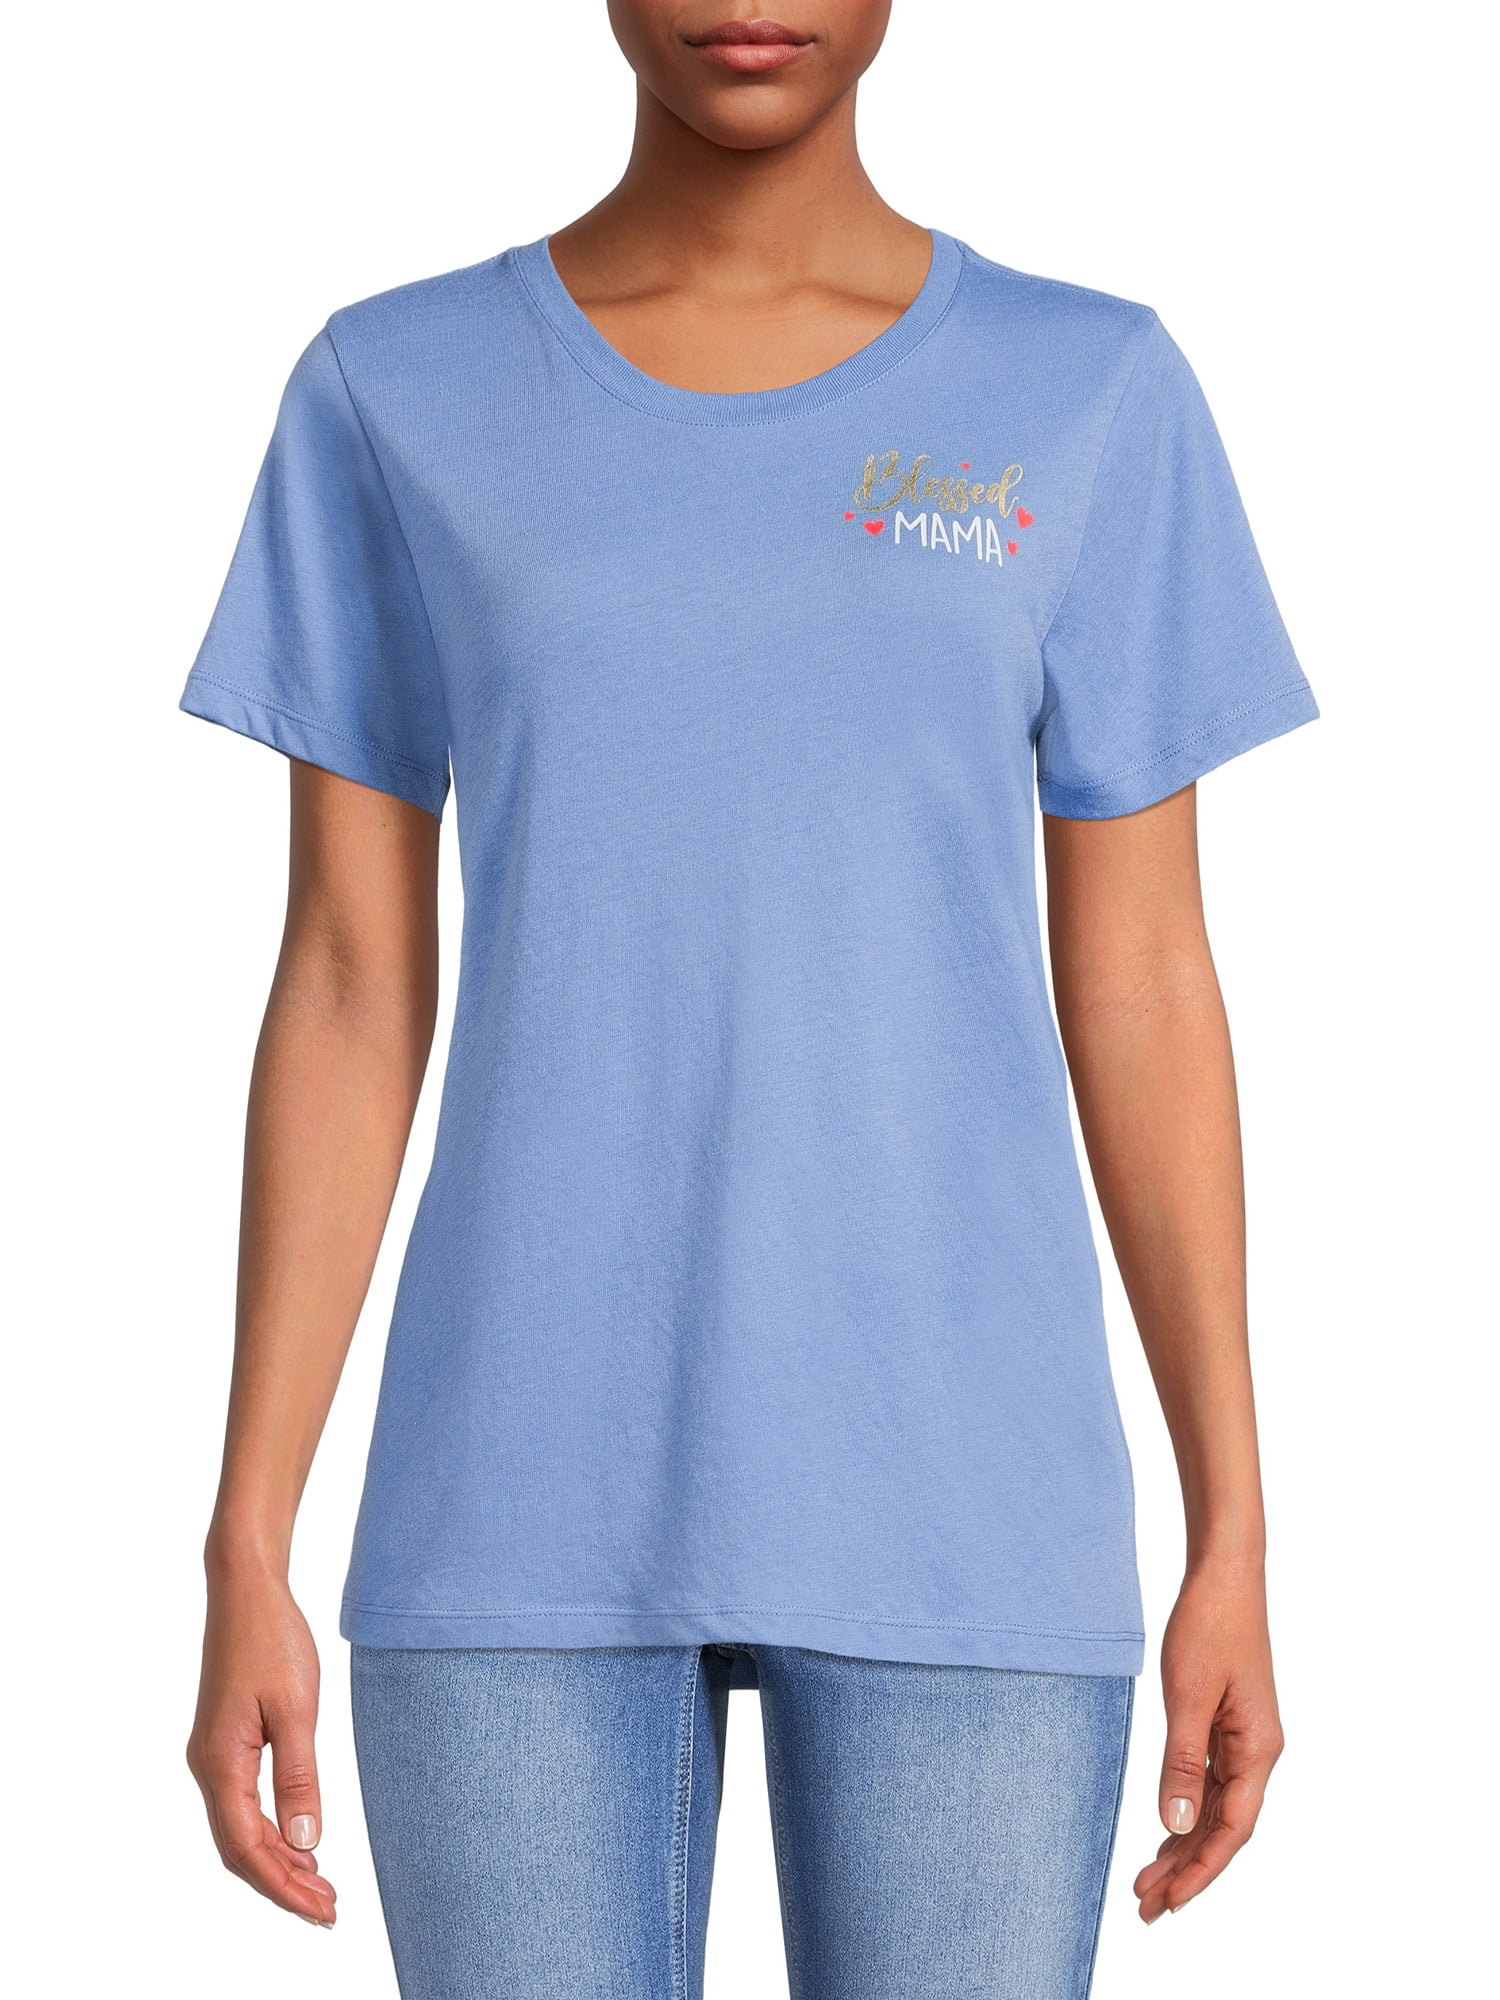 Way to Celebrate Women's Blessed Mama Graphic T-Shirt - Walmart.com